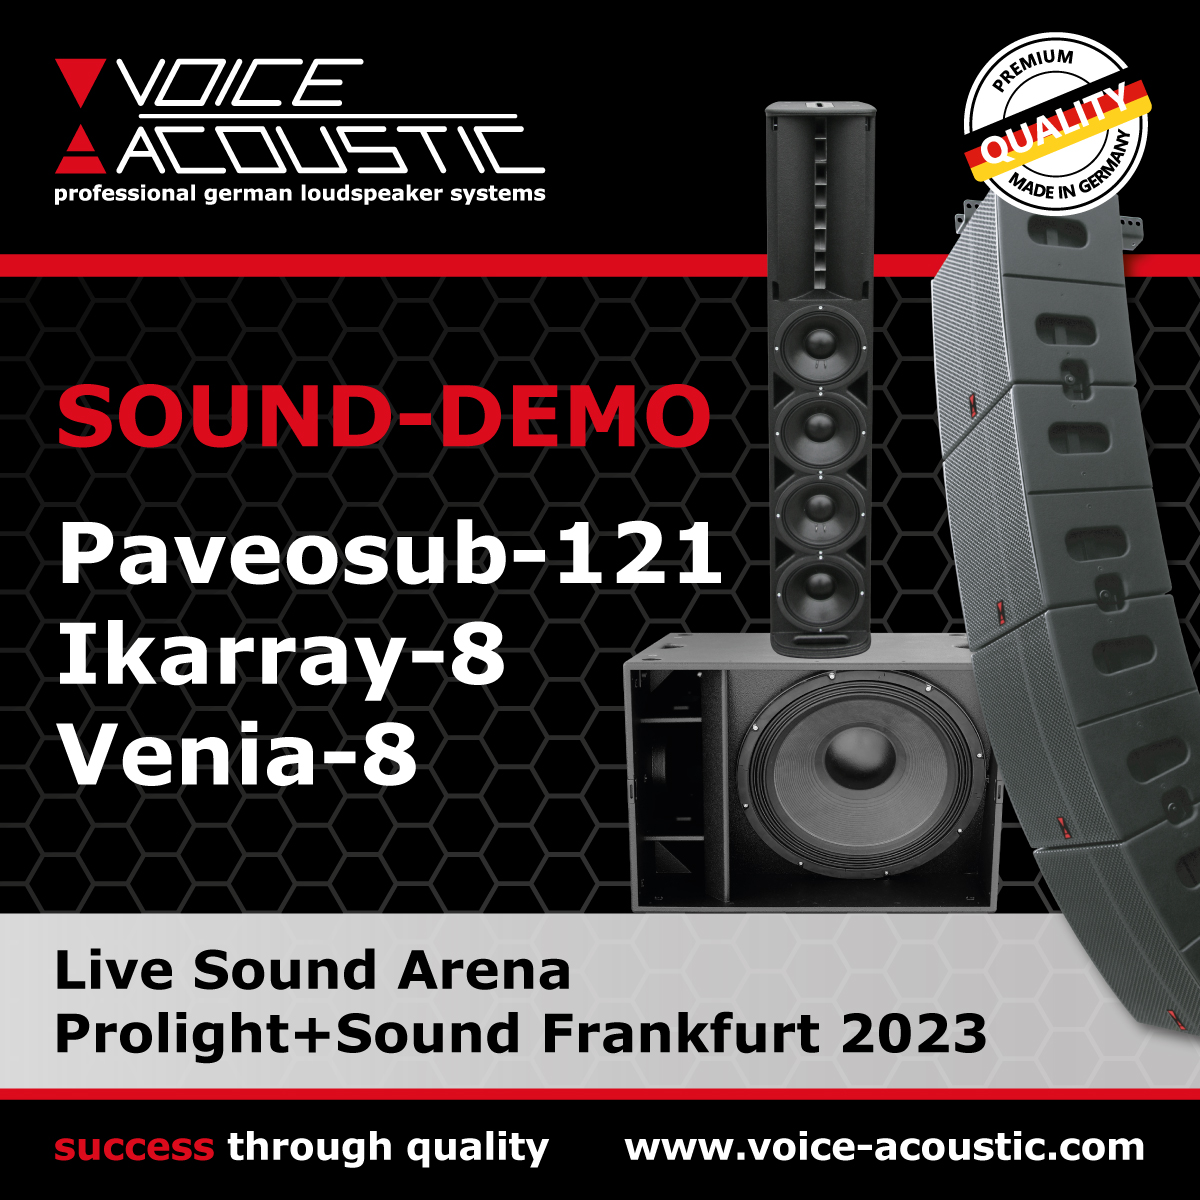 Voice-Acoustic Sound Demo at Prolight+Sound 2023